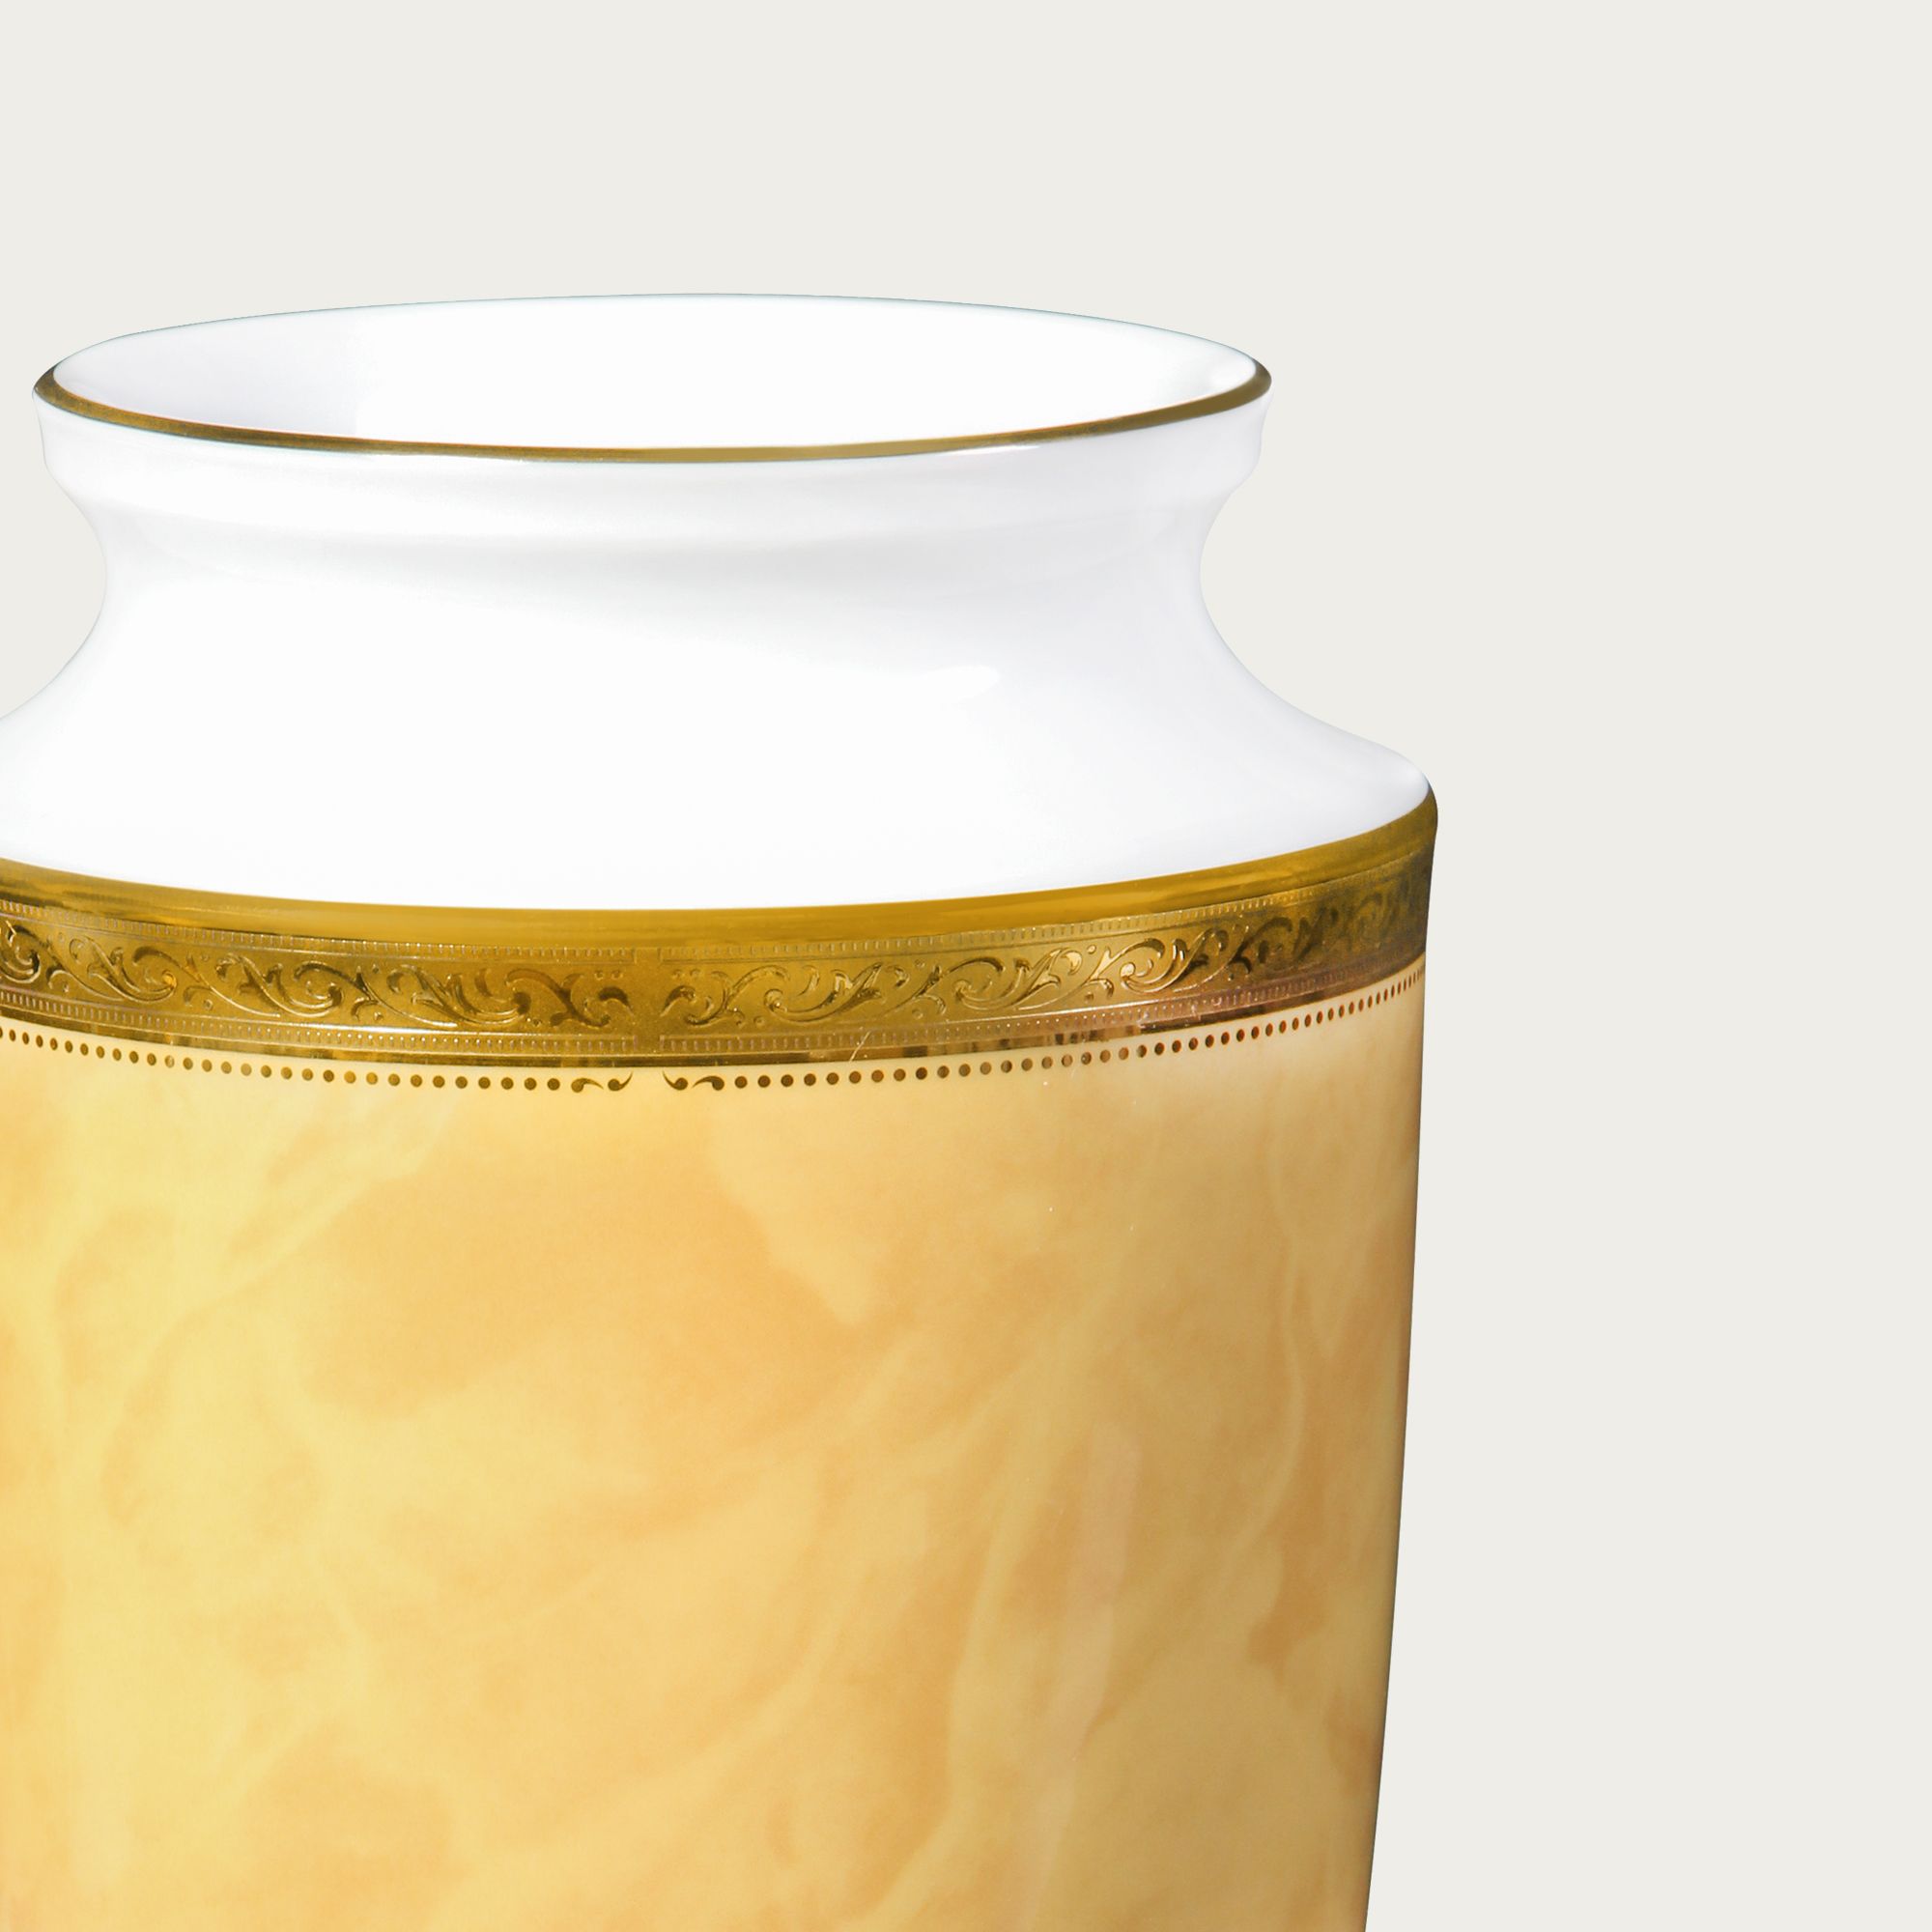  Bình hoa (Vàng) chiều cao 23,3cm | Majestic Vase M-168L - T91875K 